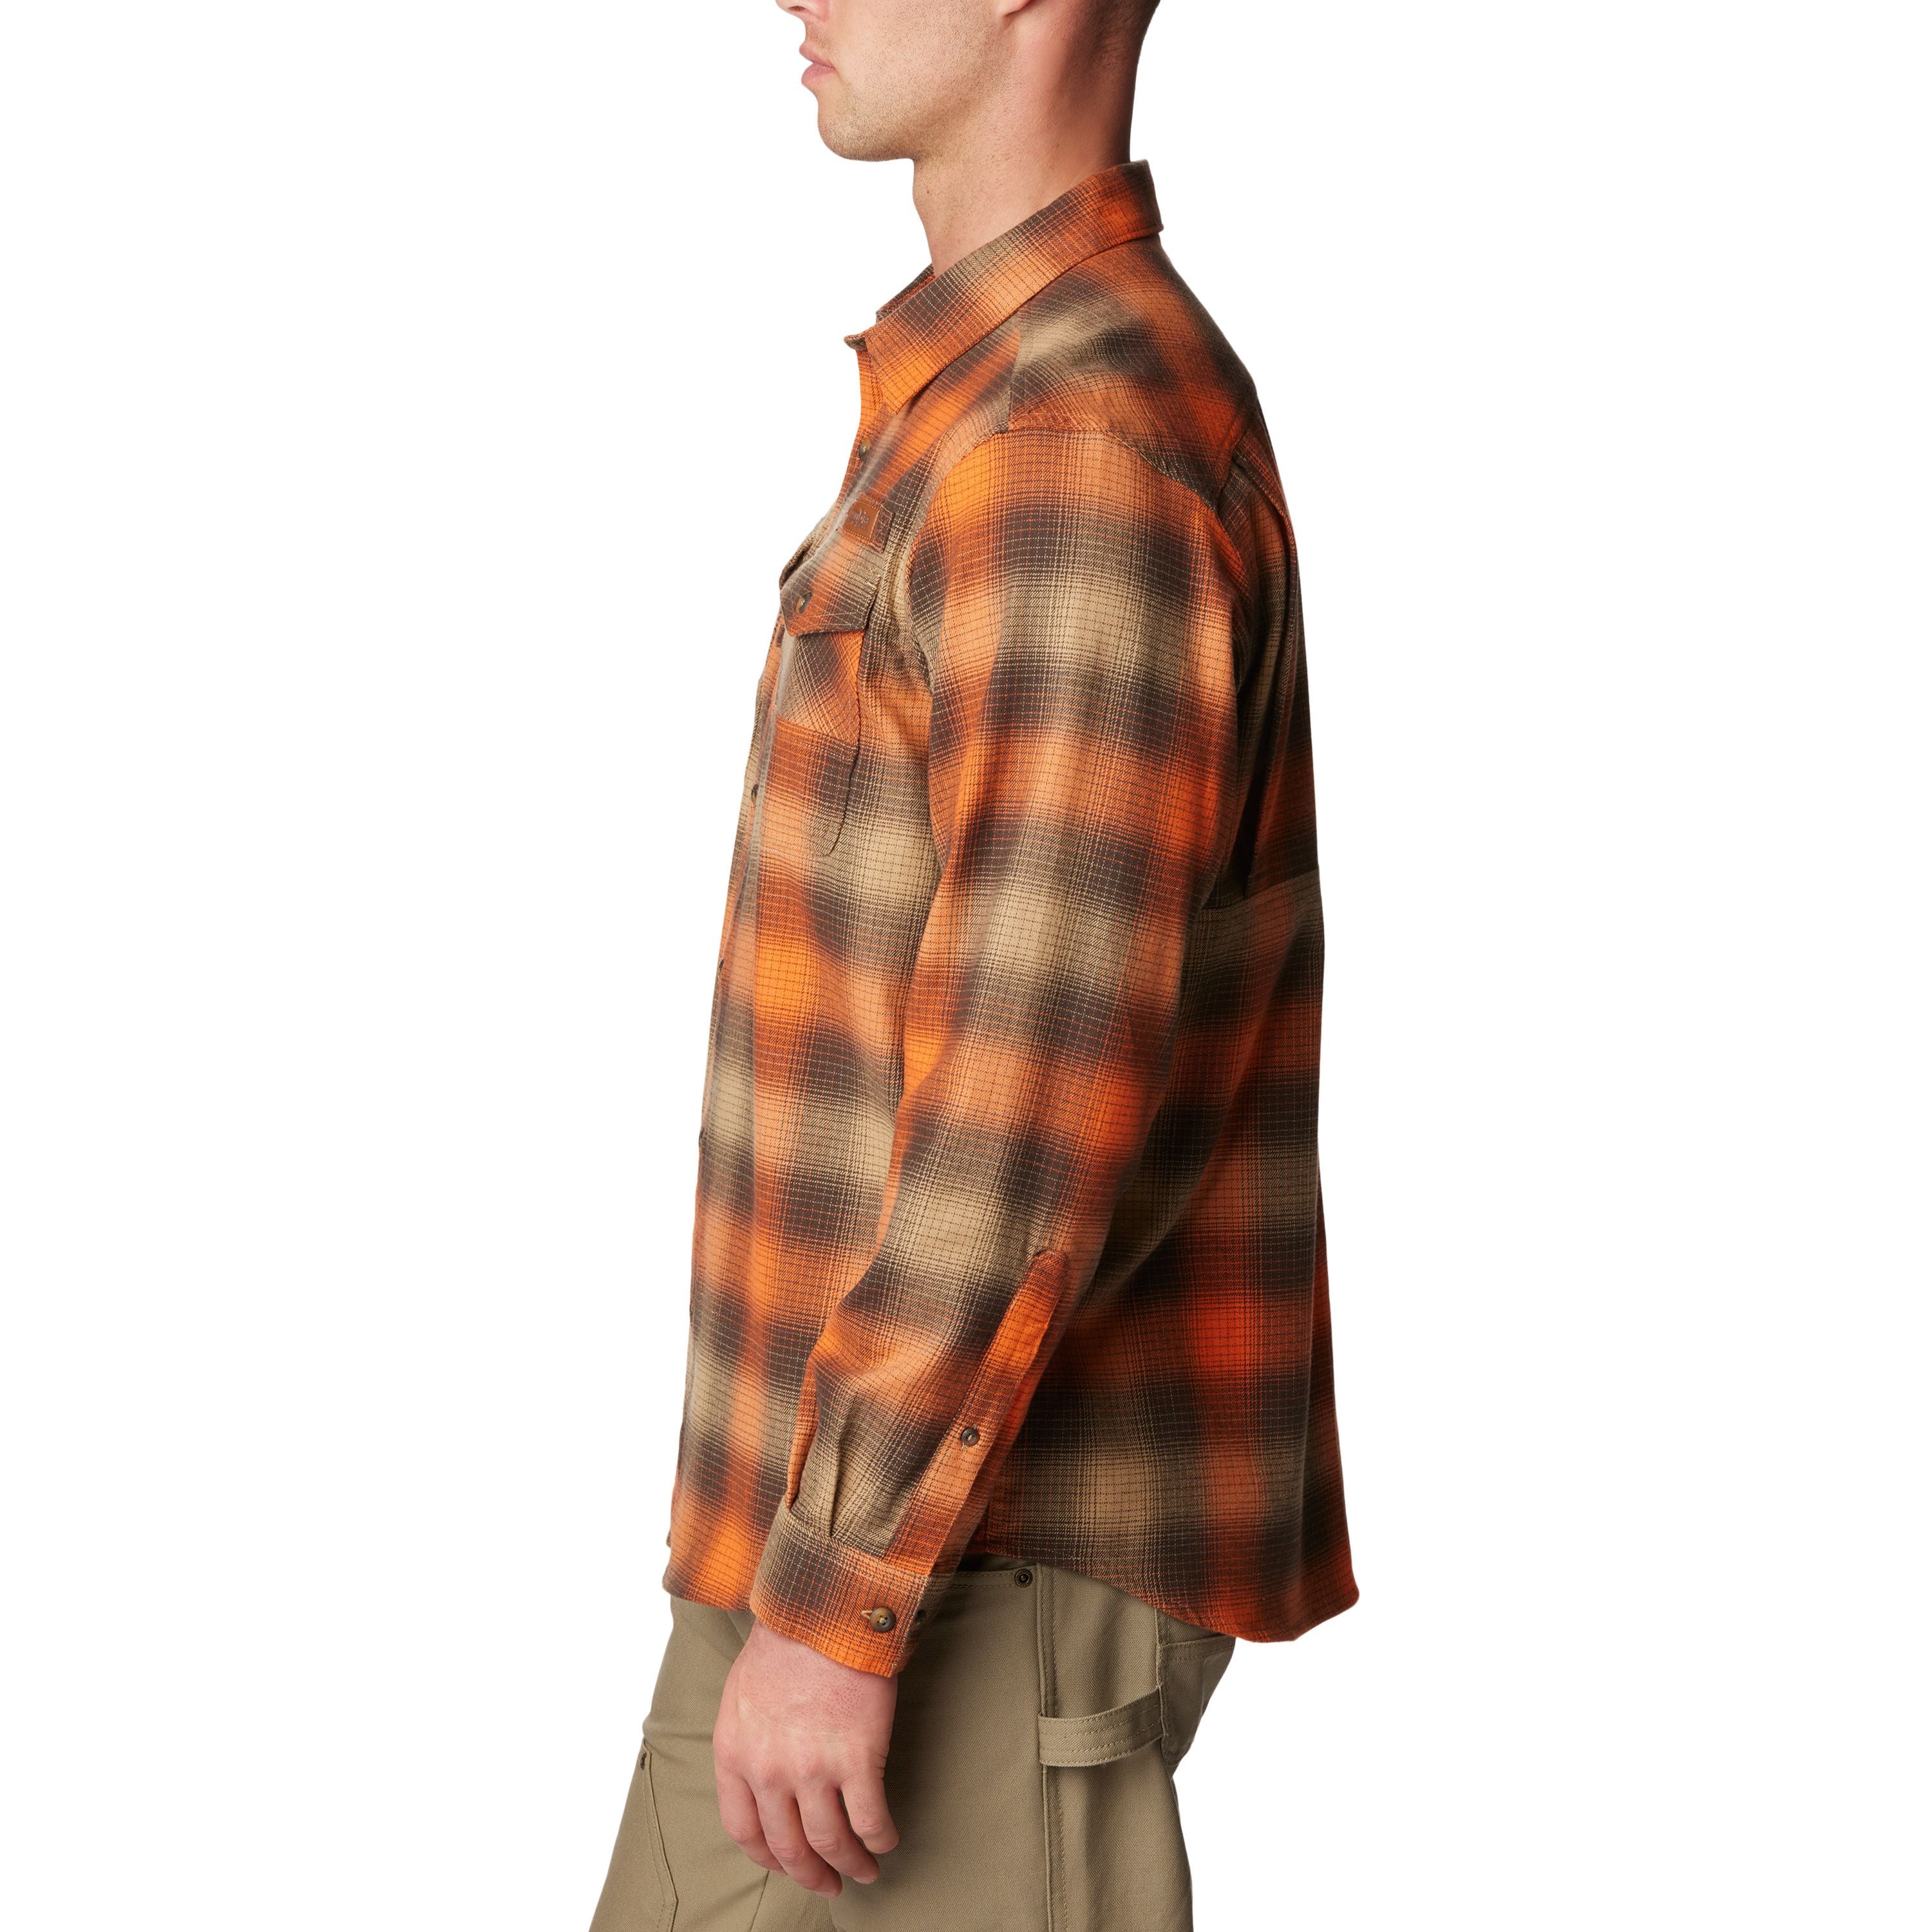 Chemise en flanelle extensible "PHG™ Roughtail" - Homme||"PHG™ Roughtail" Stretch flannel shirt - Men's